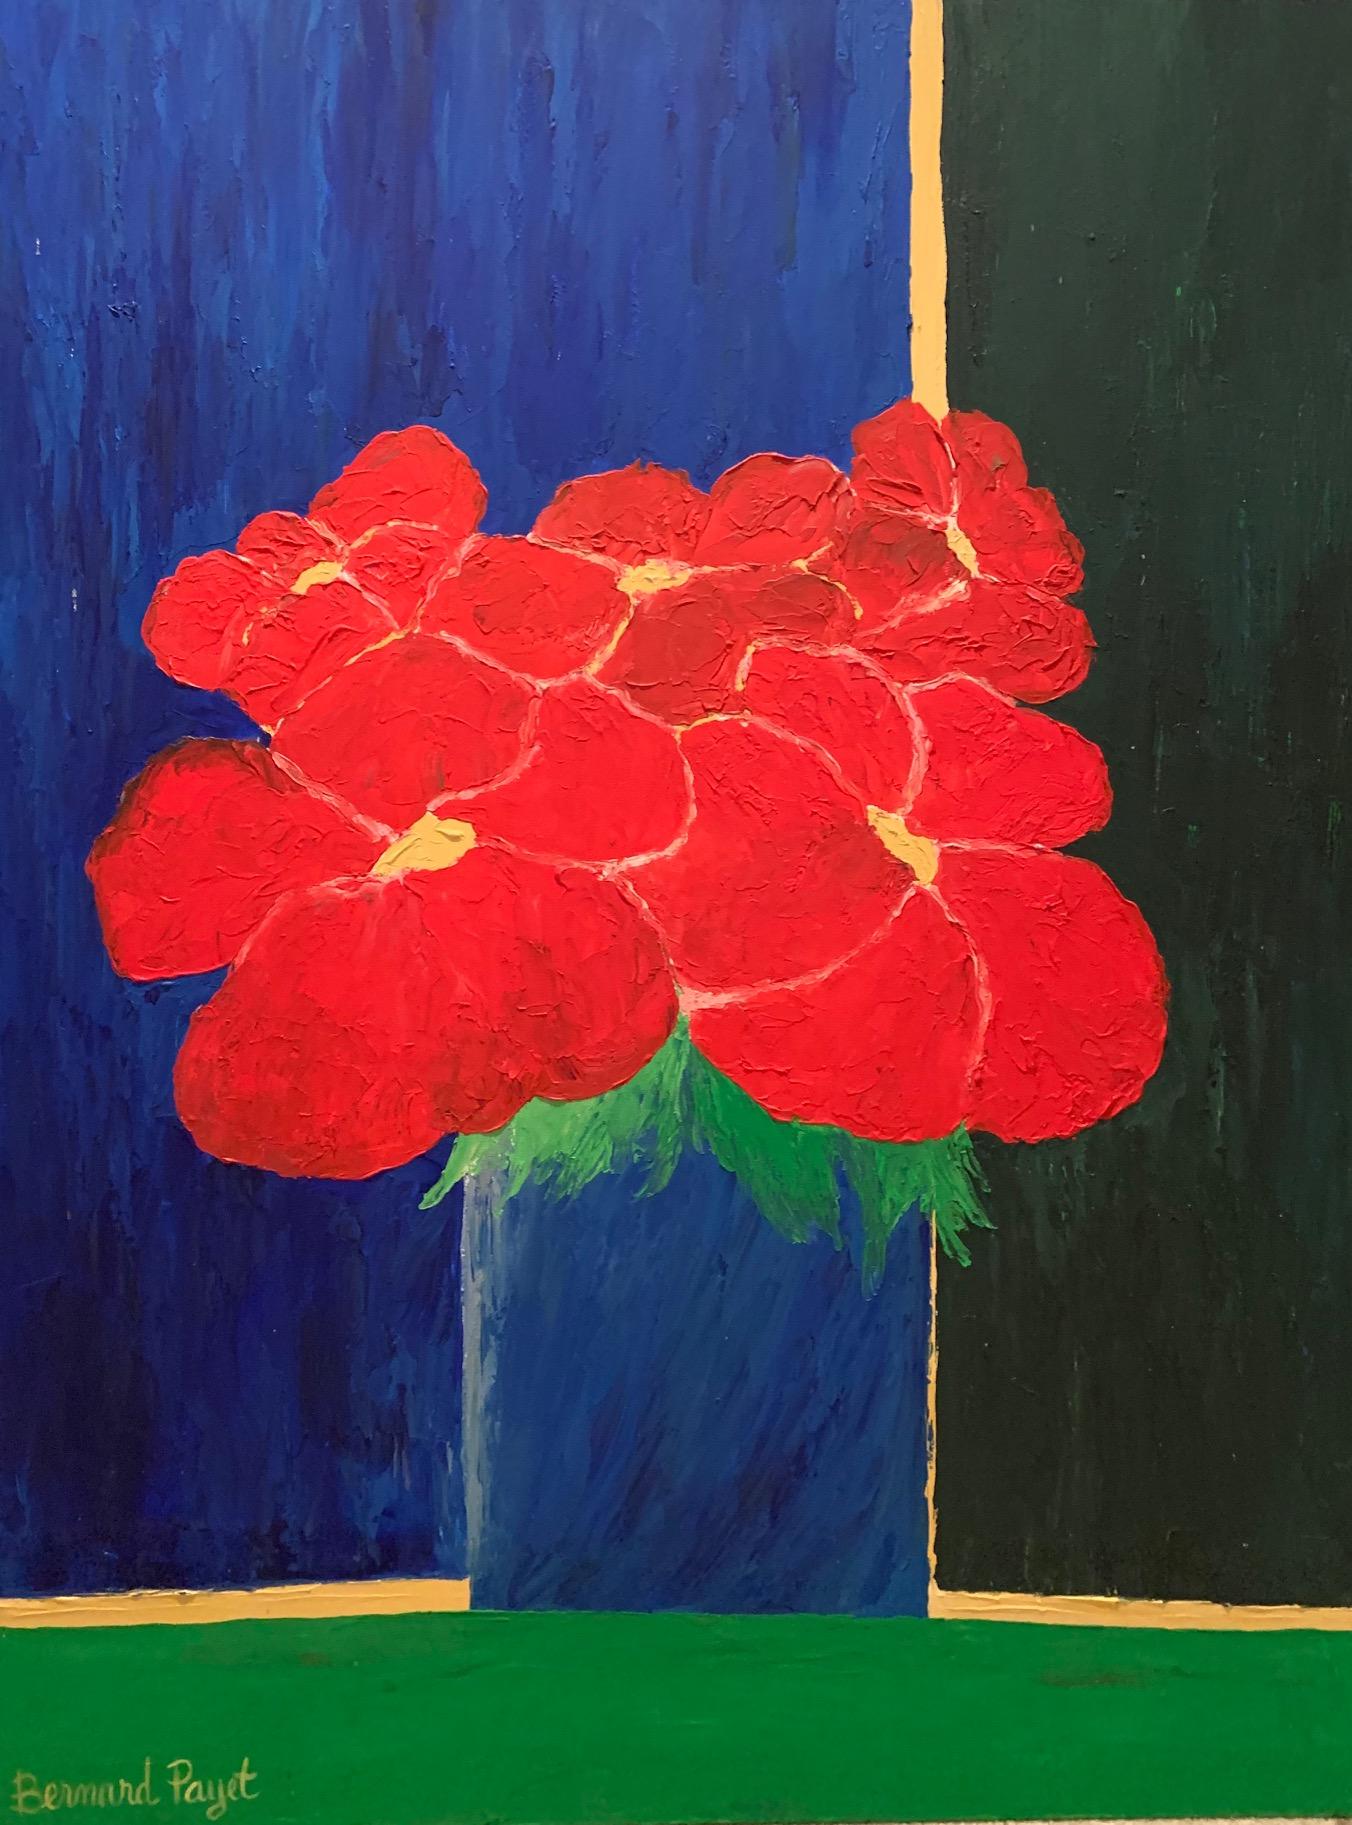 Bernard Payet Still-Life Painting - "Blue Vase Red Flowers” - Vibrant Still-Life - Floral Painting